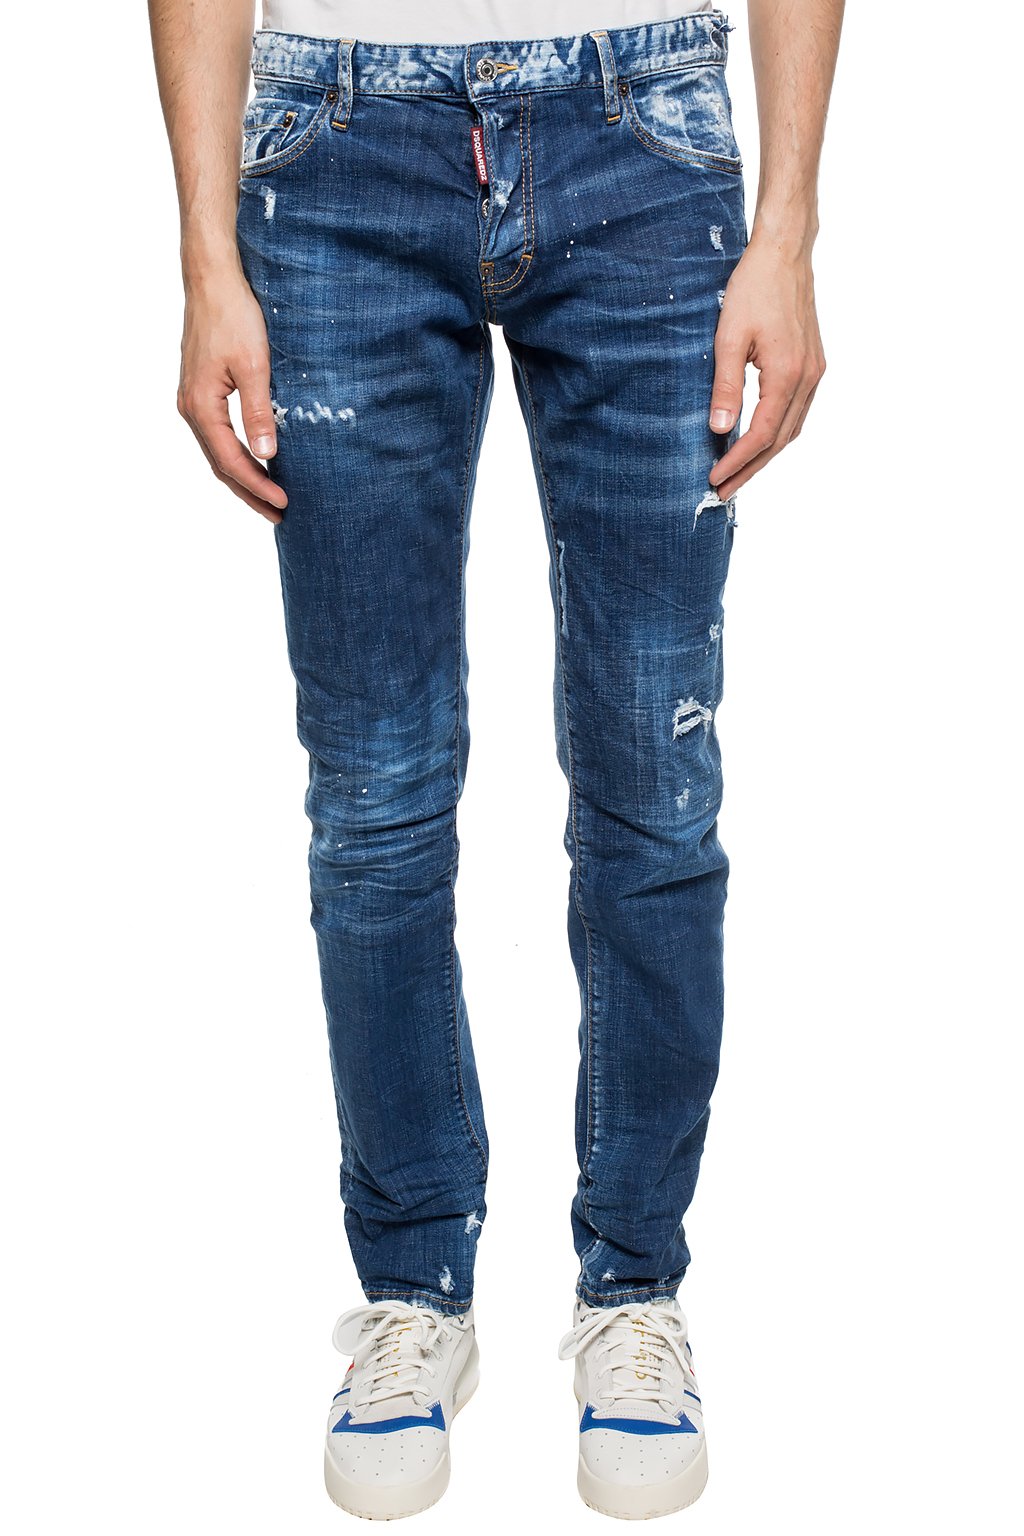 Dsquared2 ‘Slim Jean’ jeans | Men's Clothing | Vitkac